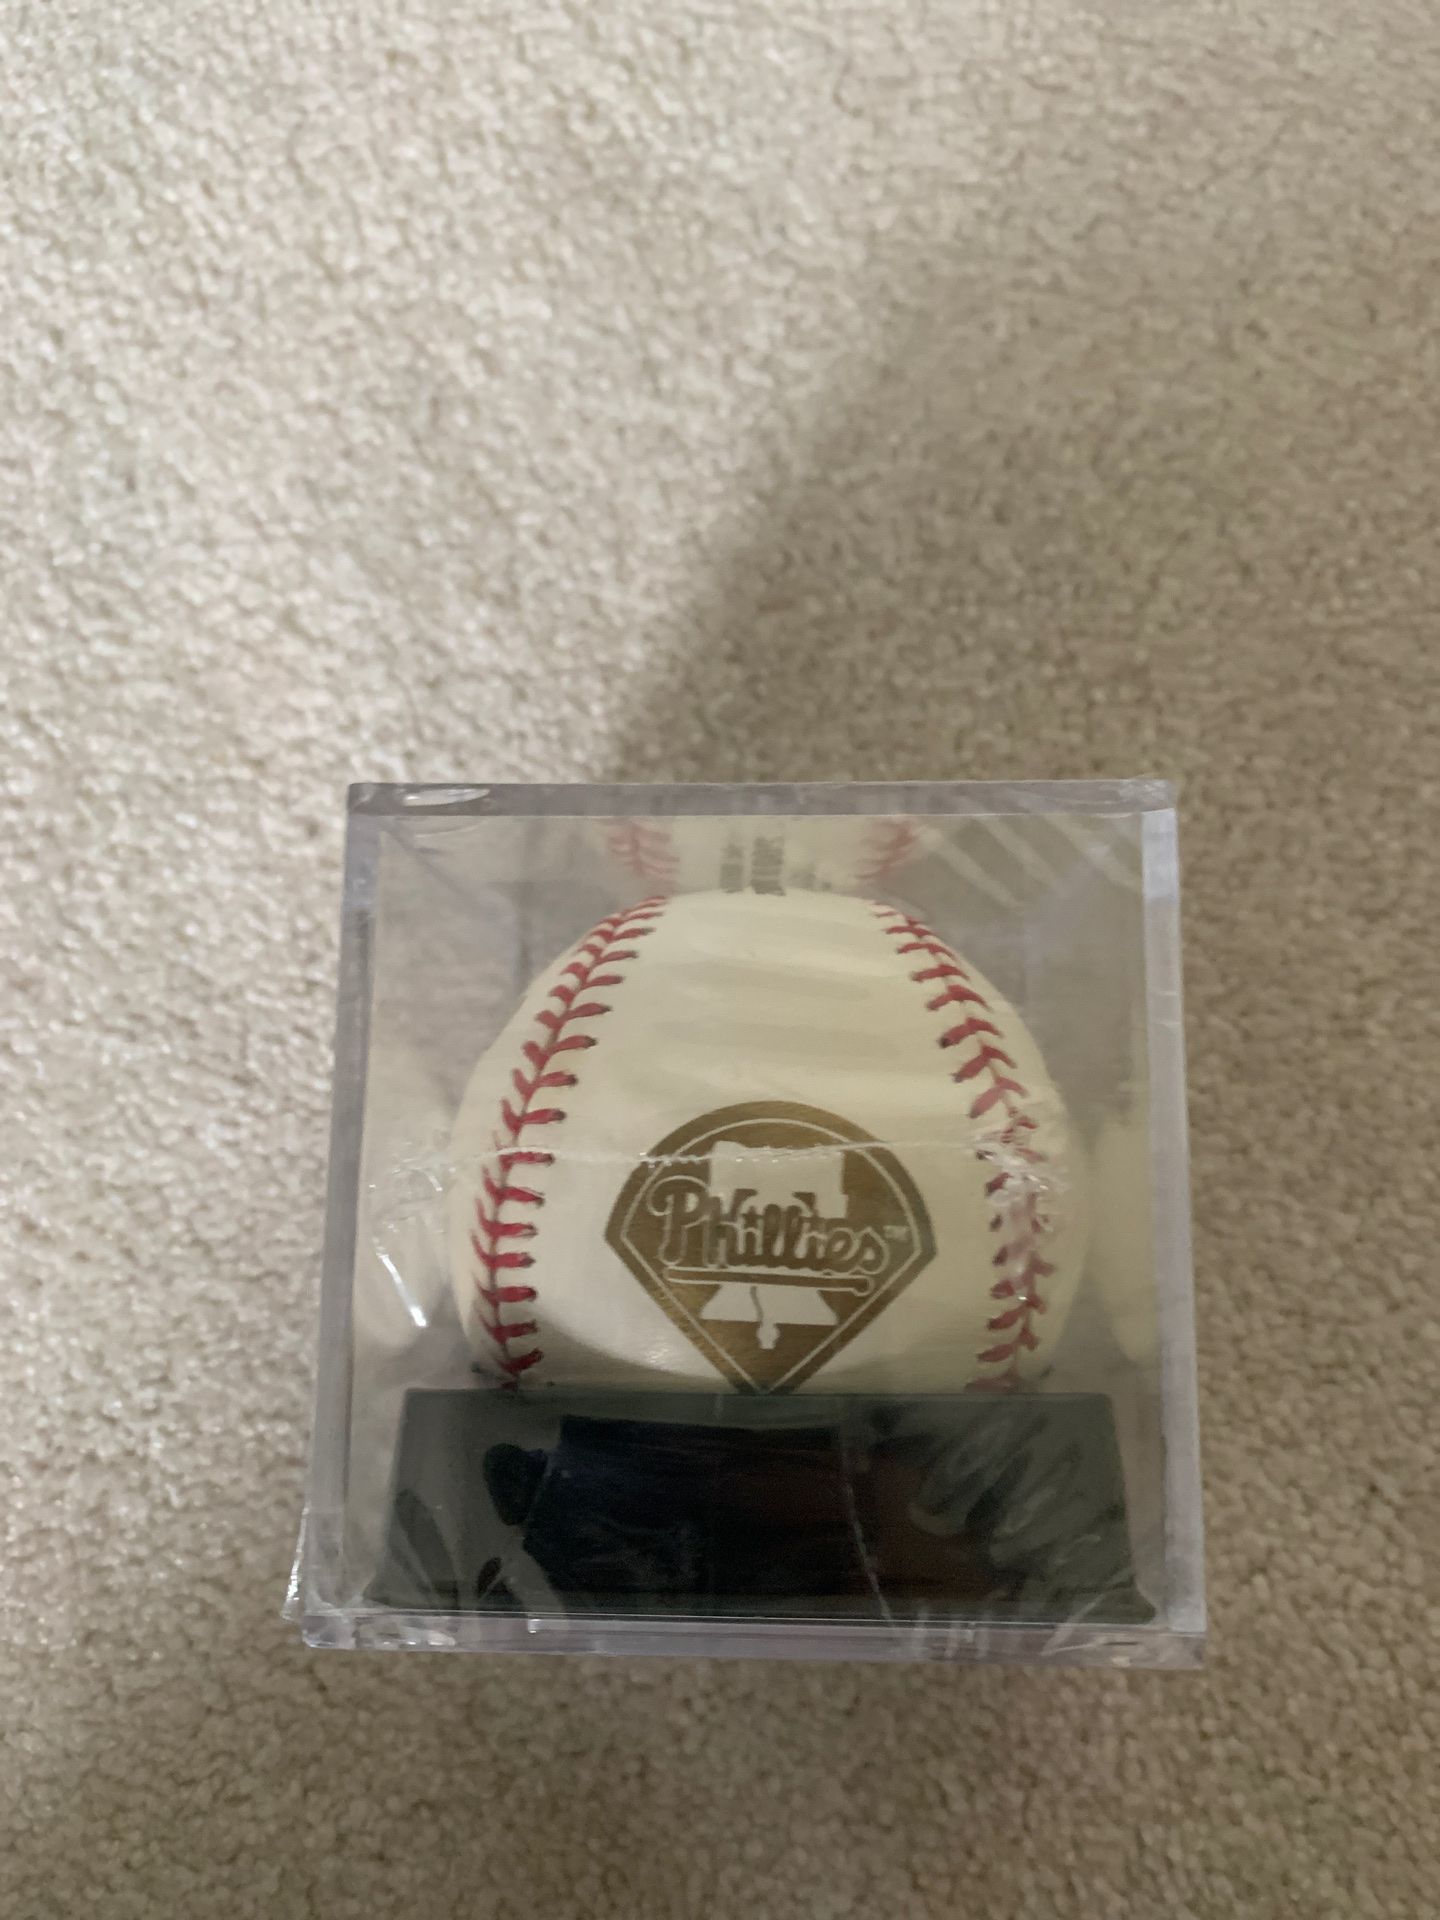 Phillies 2008 World Series Ball